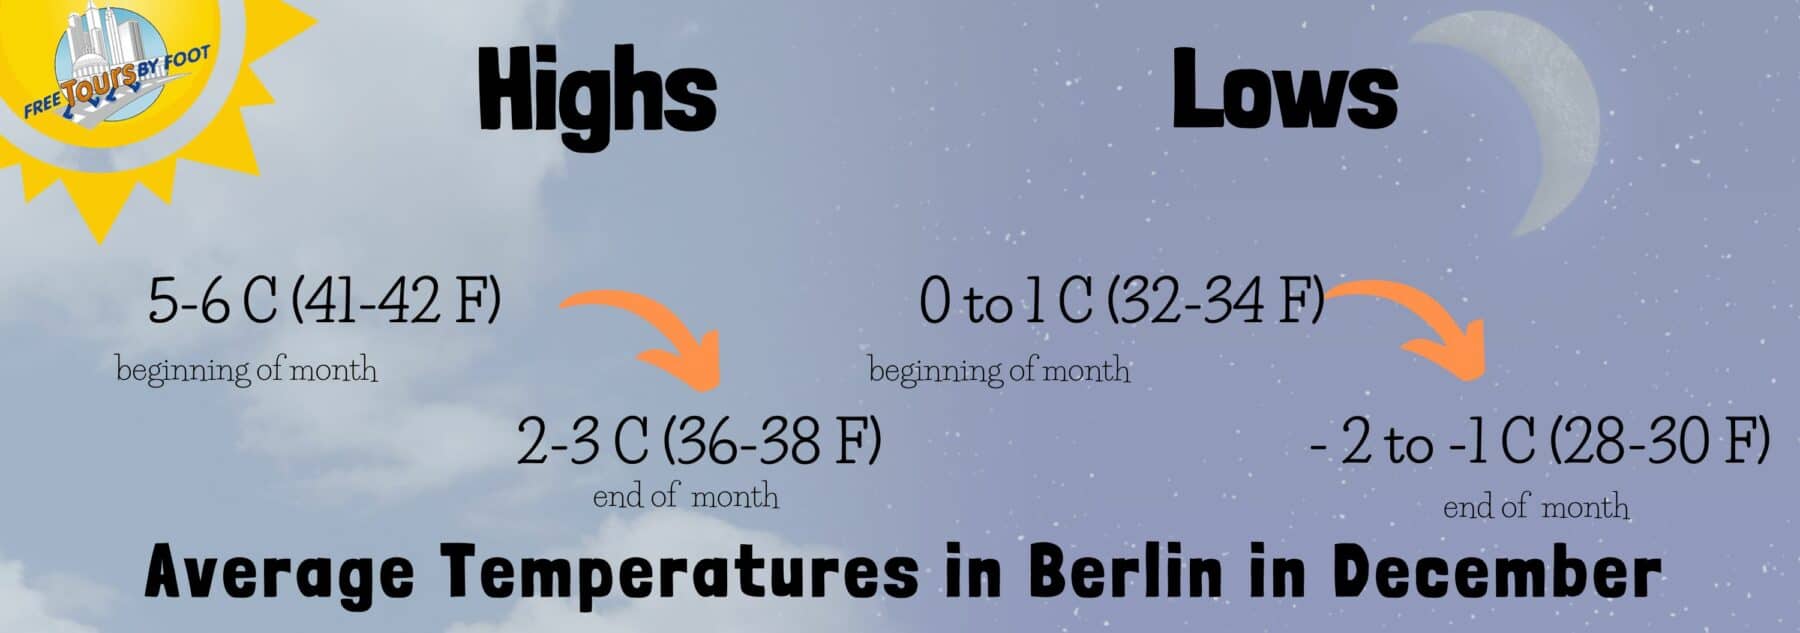 average temperatures in berlin in december